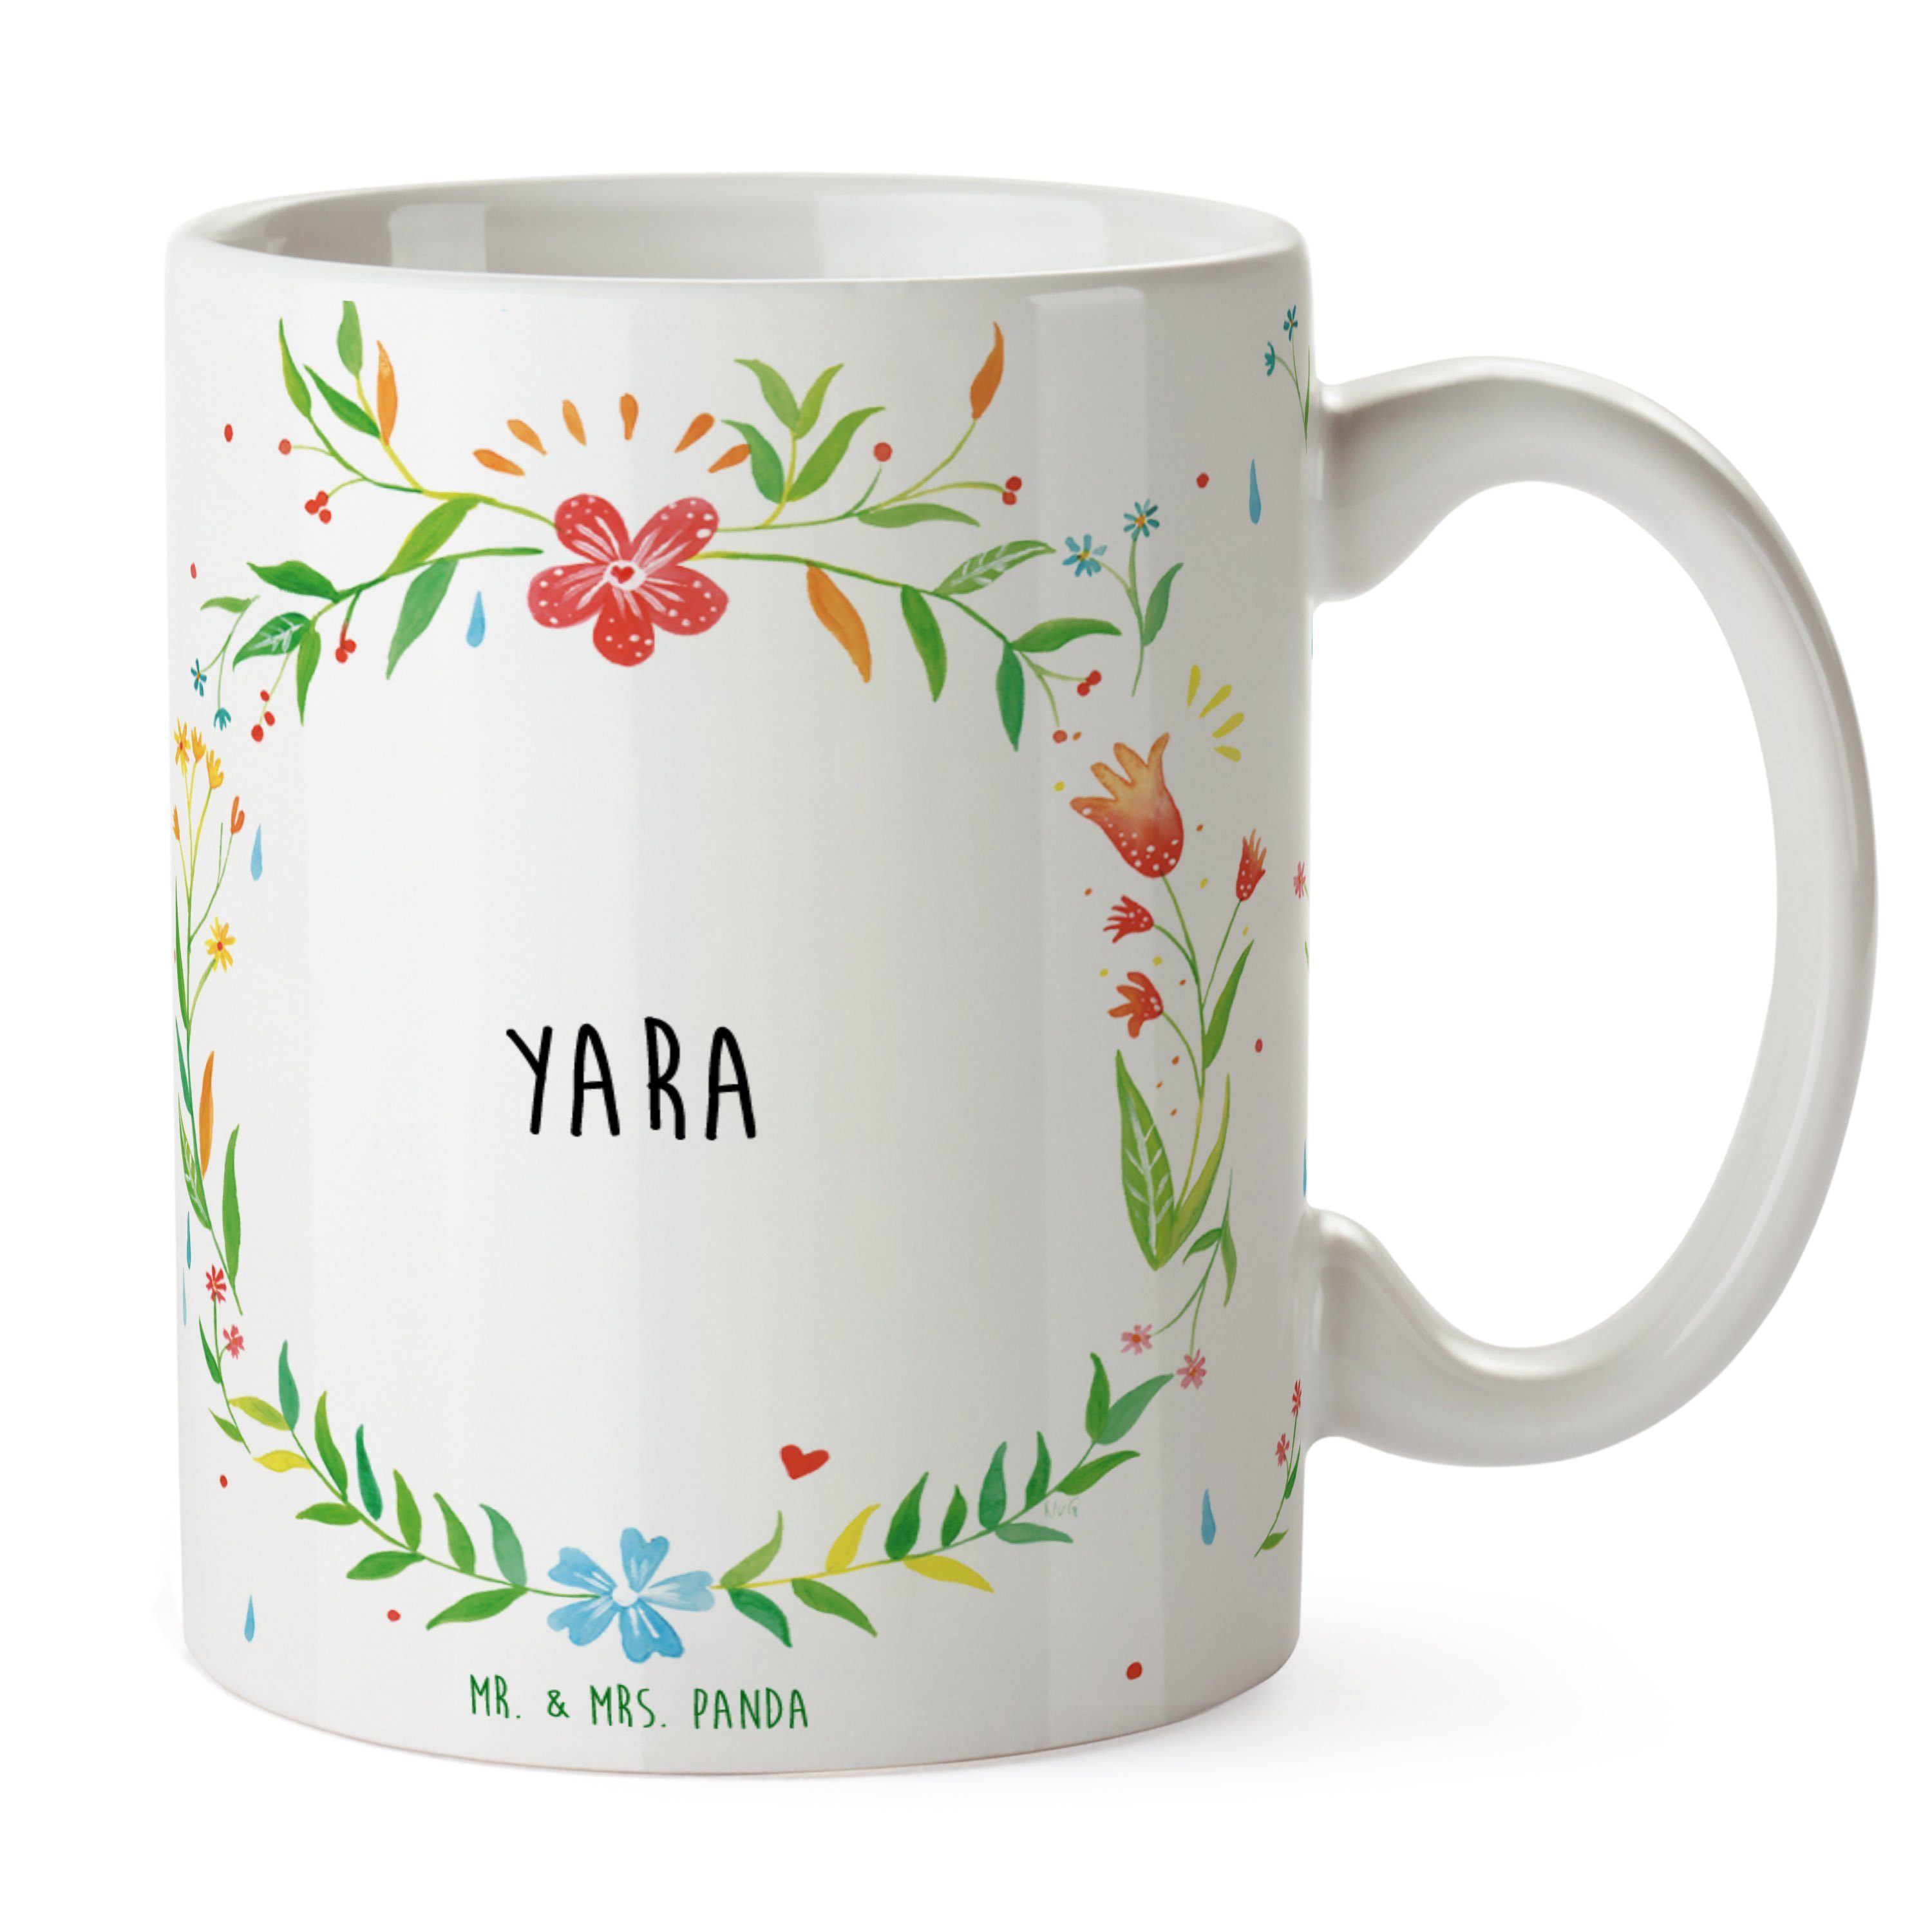 Mr. & Mrs. Panda Tasse Geschenk - Motive, Keramik Geschenk, Tasse, Tasse Yara Kaffee, Porzellantasse